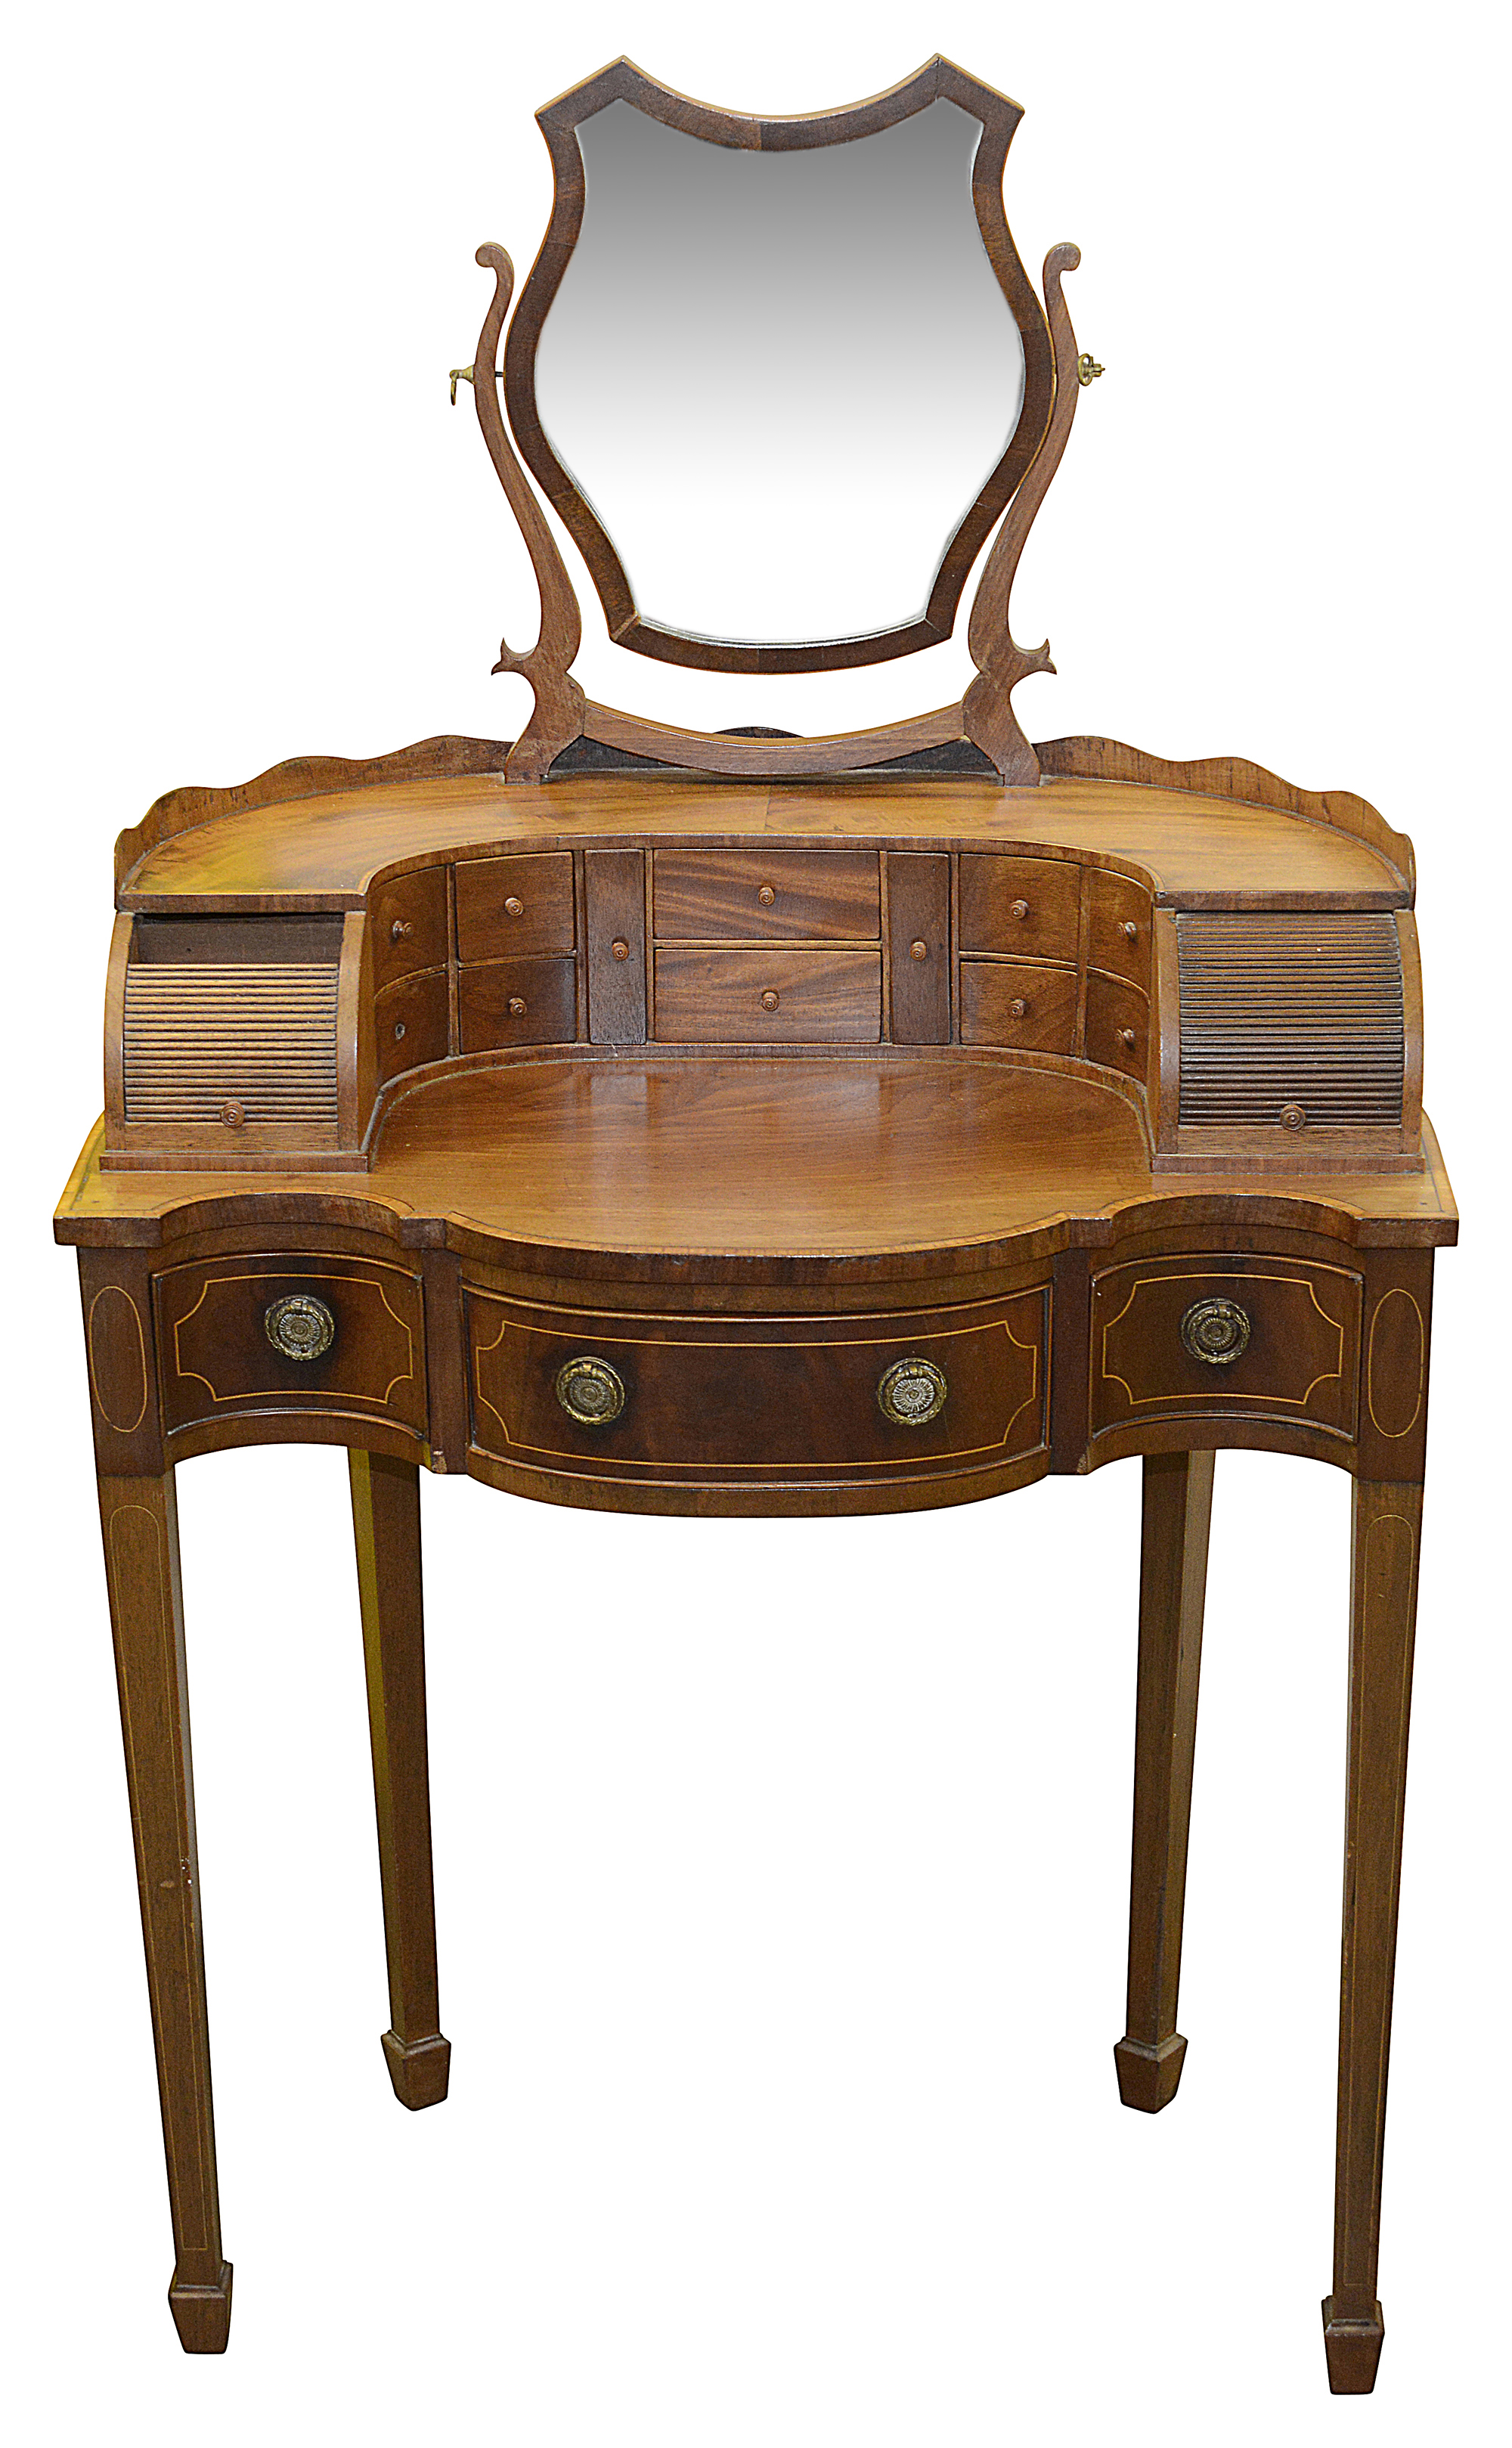 A Sheraton revival Carlton House style dressing table